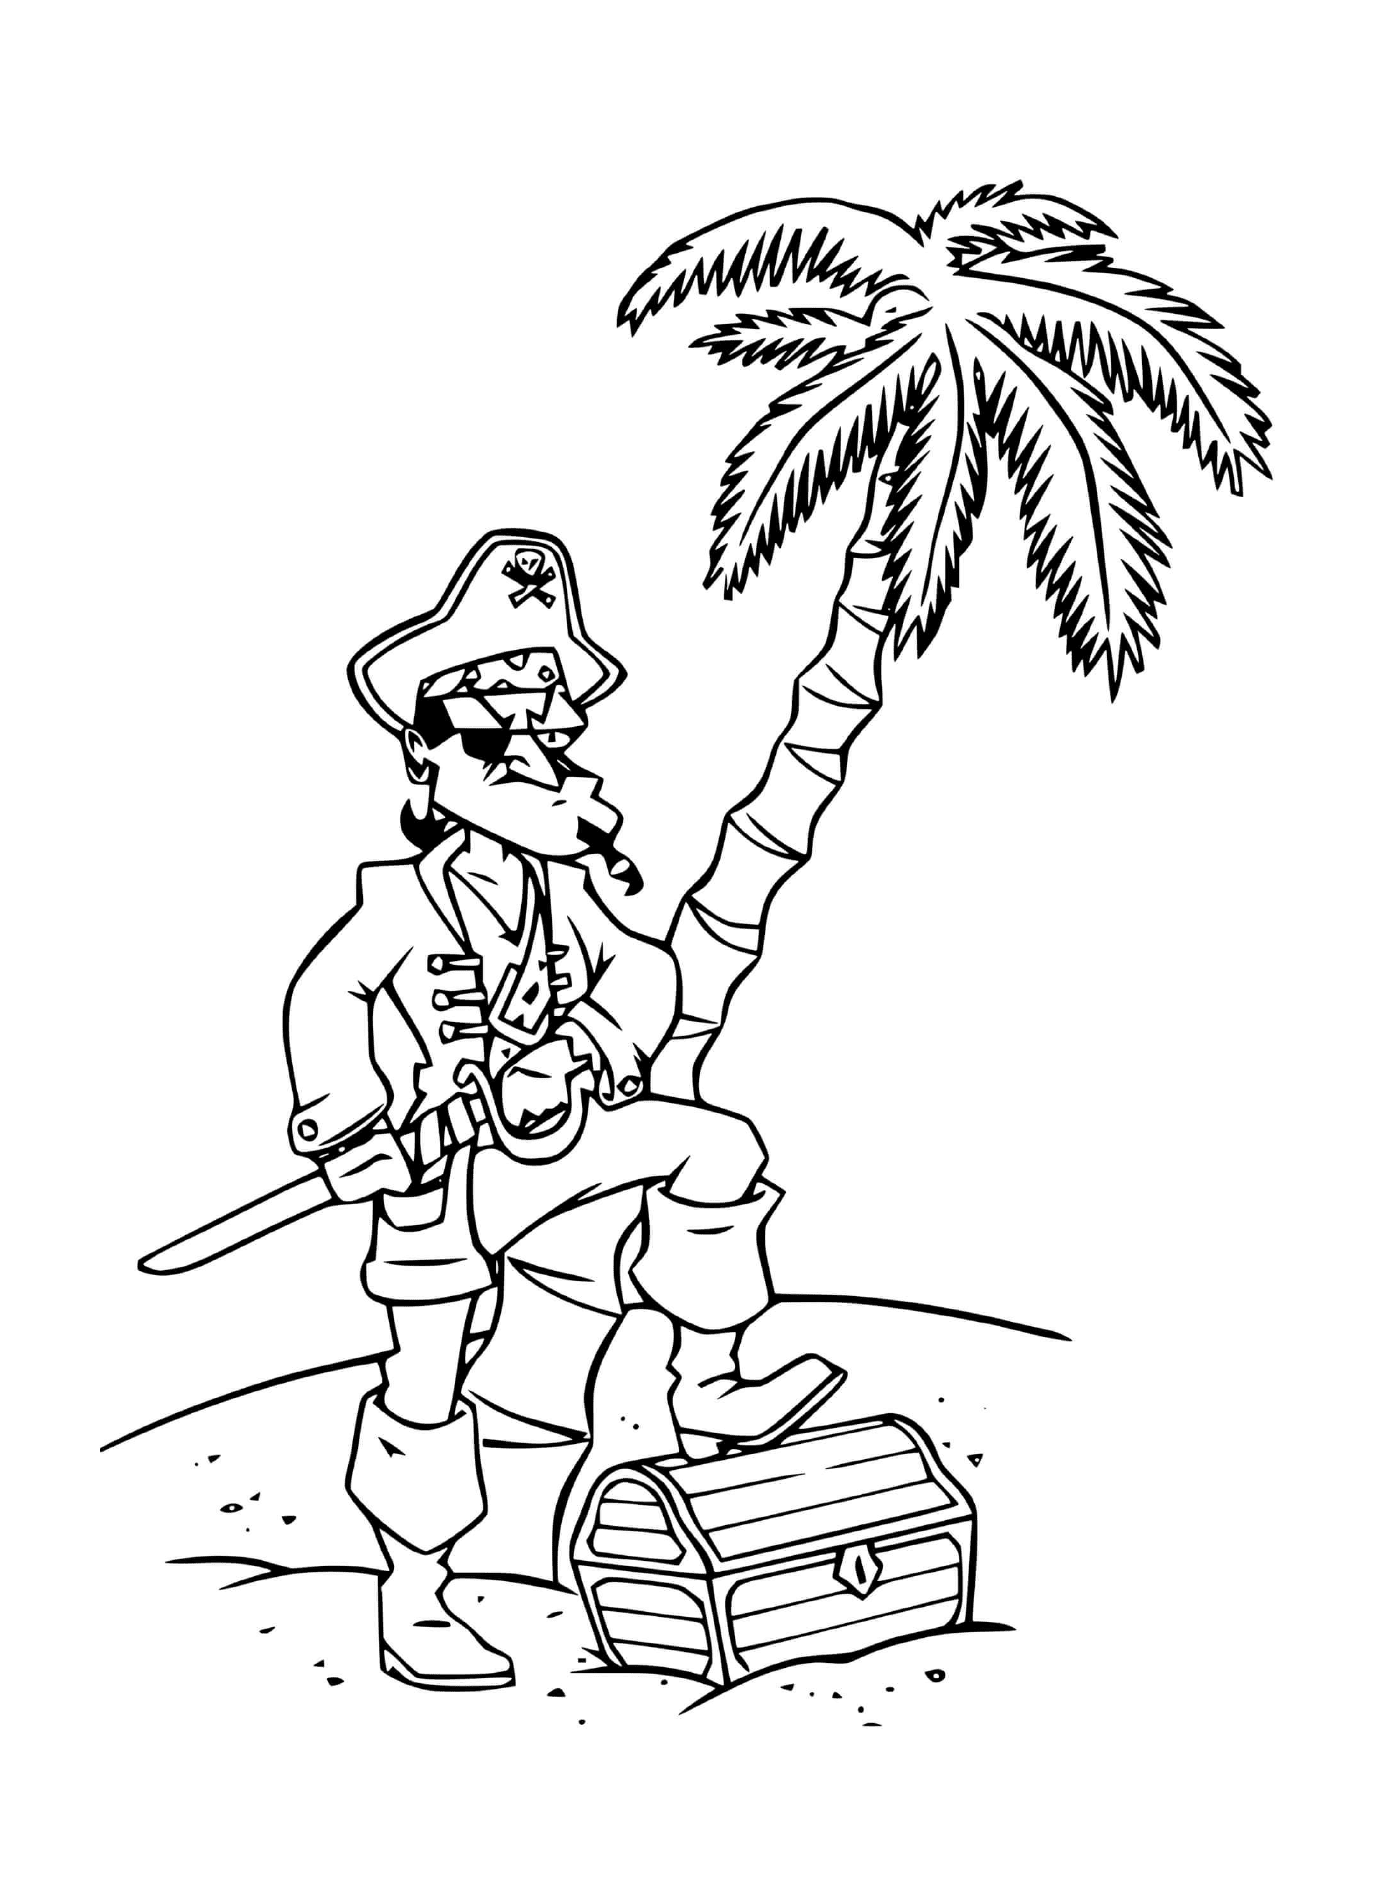  Pirate boy unhappy on island 